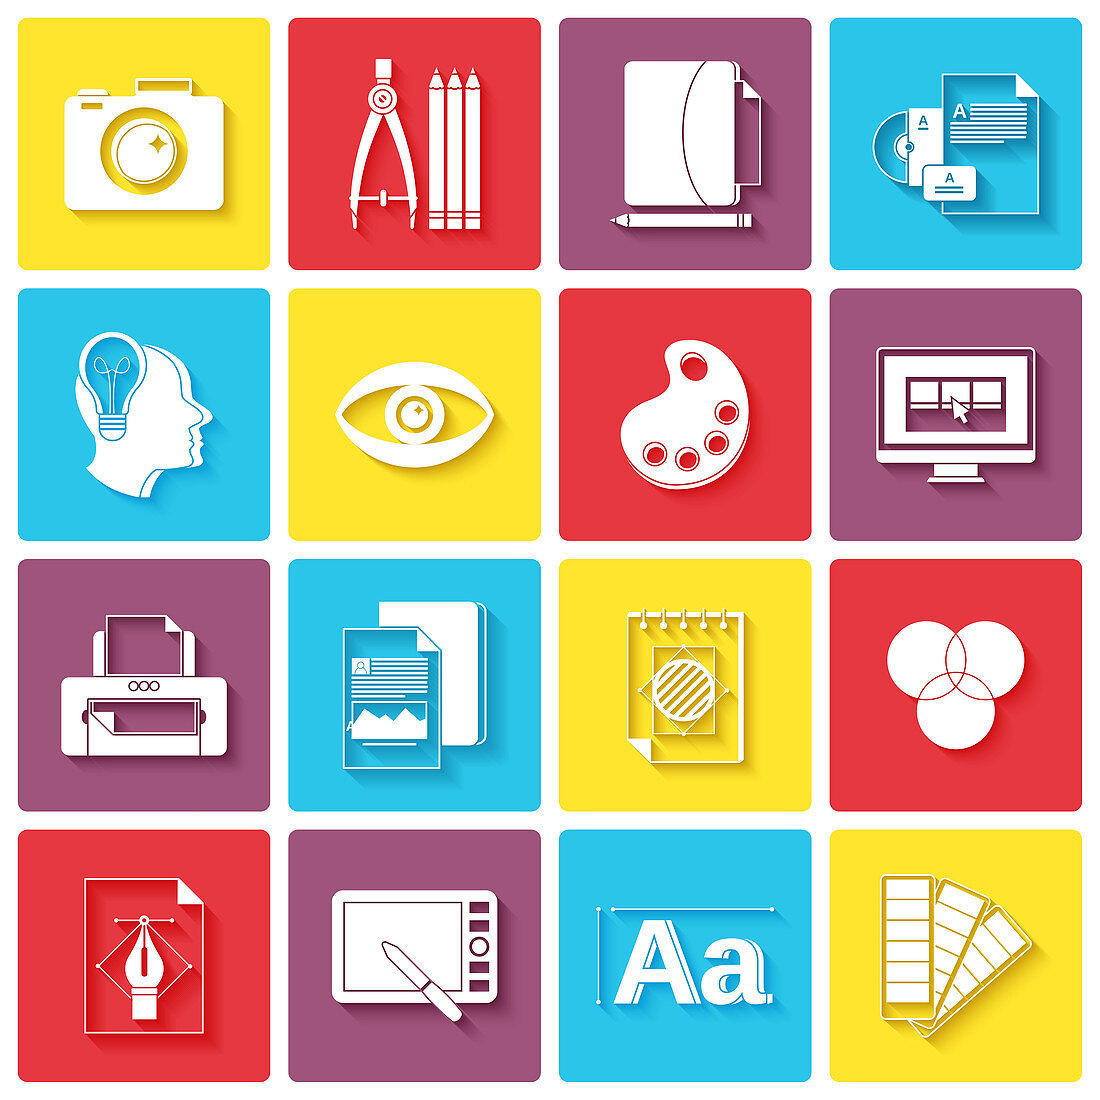 Graphic design icons, illustration